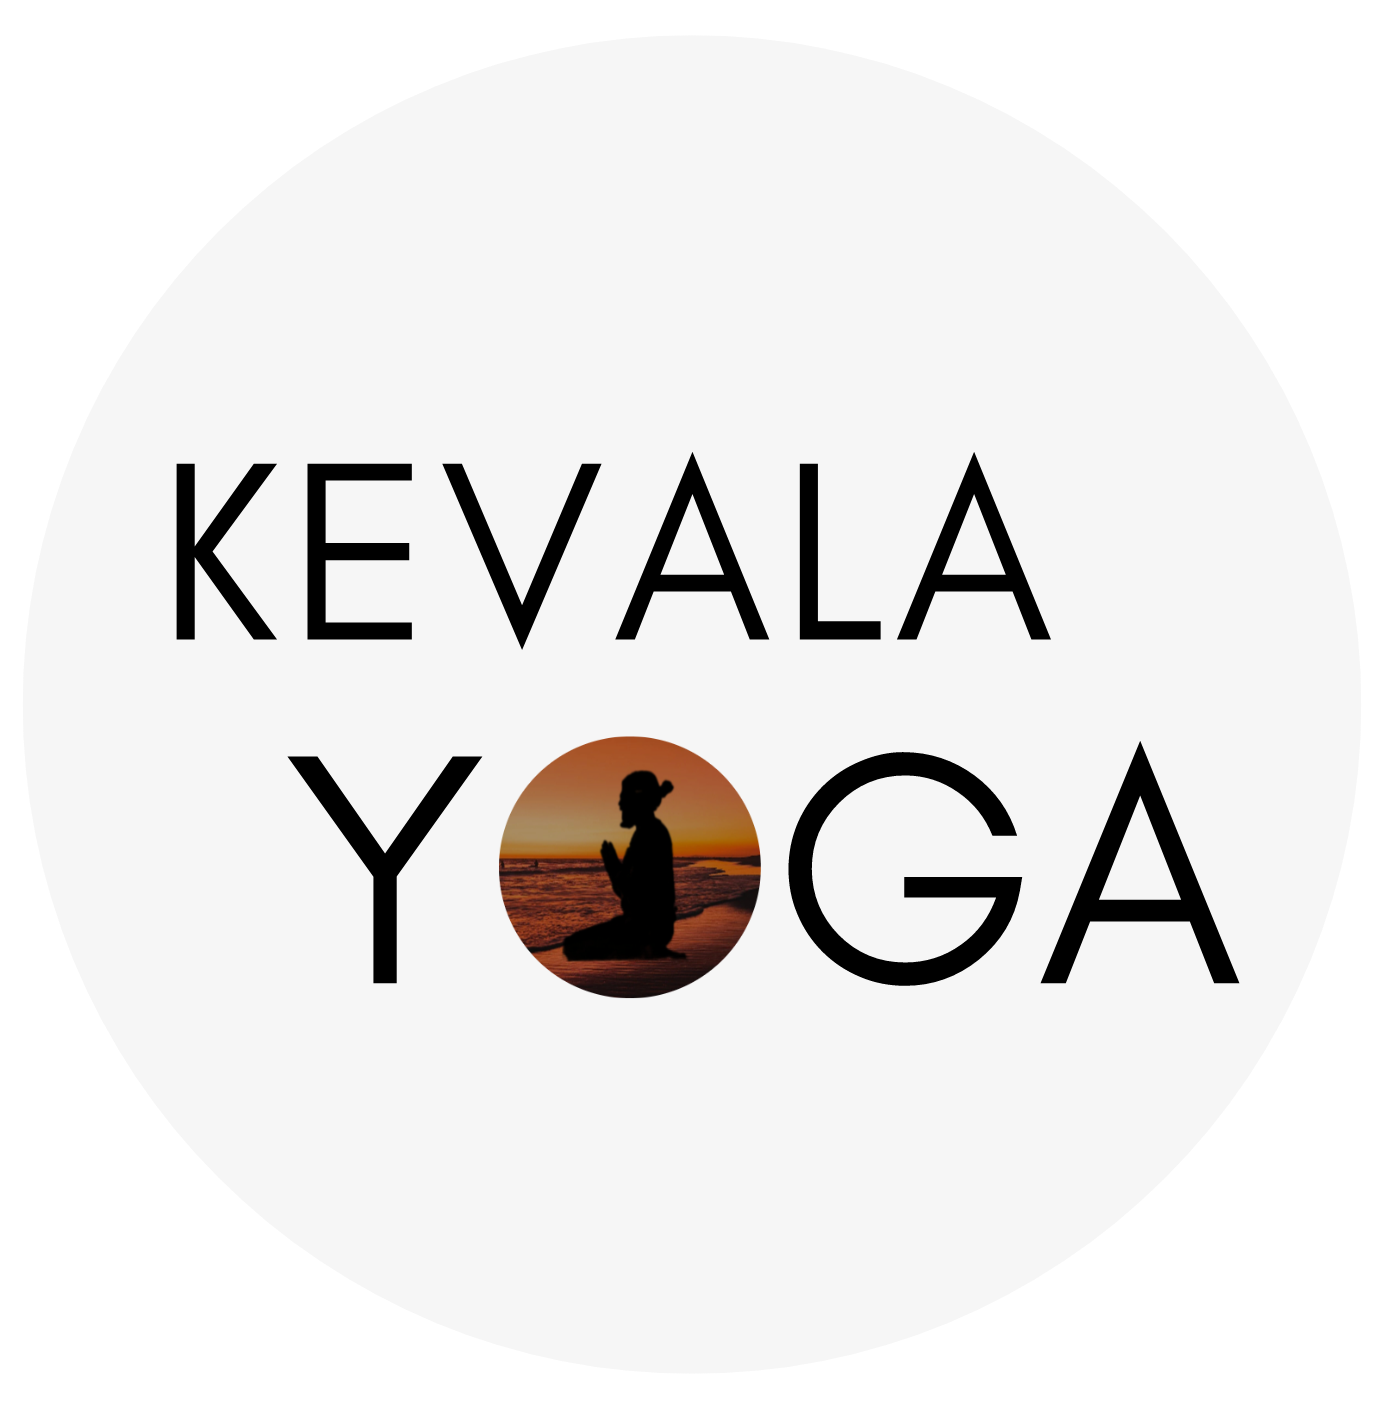 Kevala Yoga: Yoga Studio in White Rock and South Surrey - Gift Card